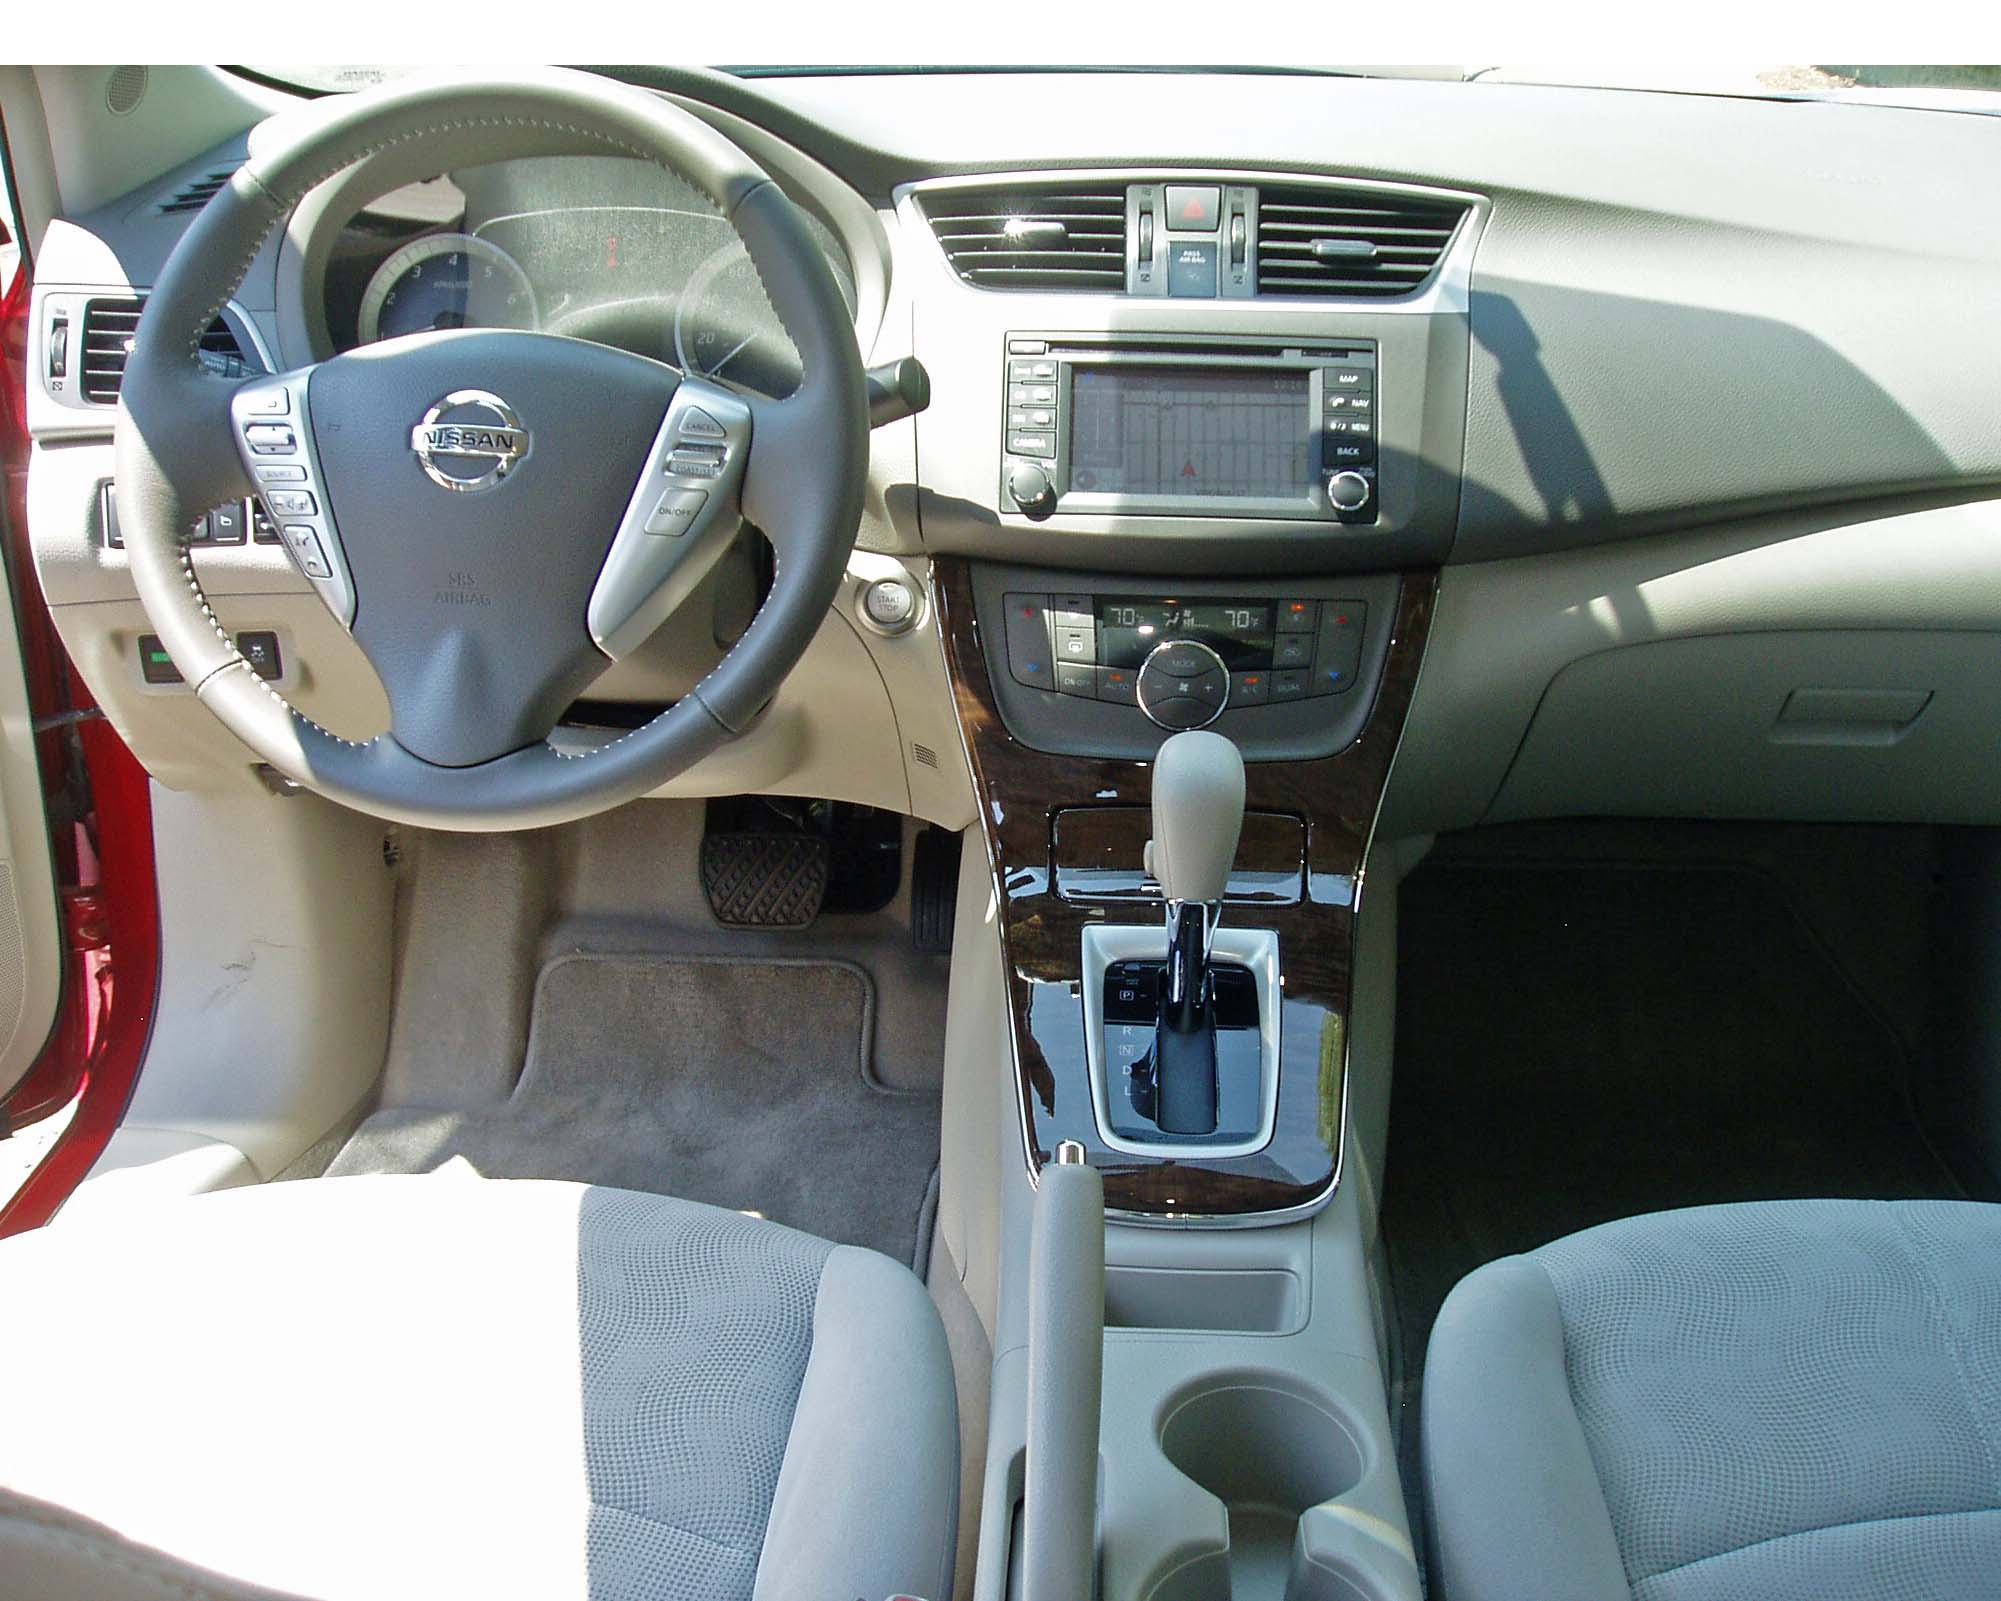 2013 Nissan Sentra SL Sedan Test Drive | Our Auto Expert